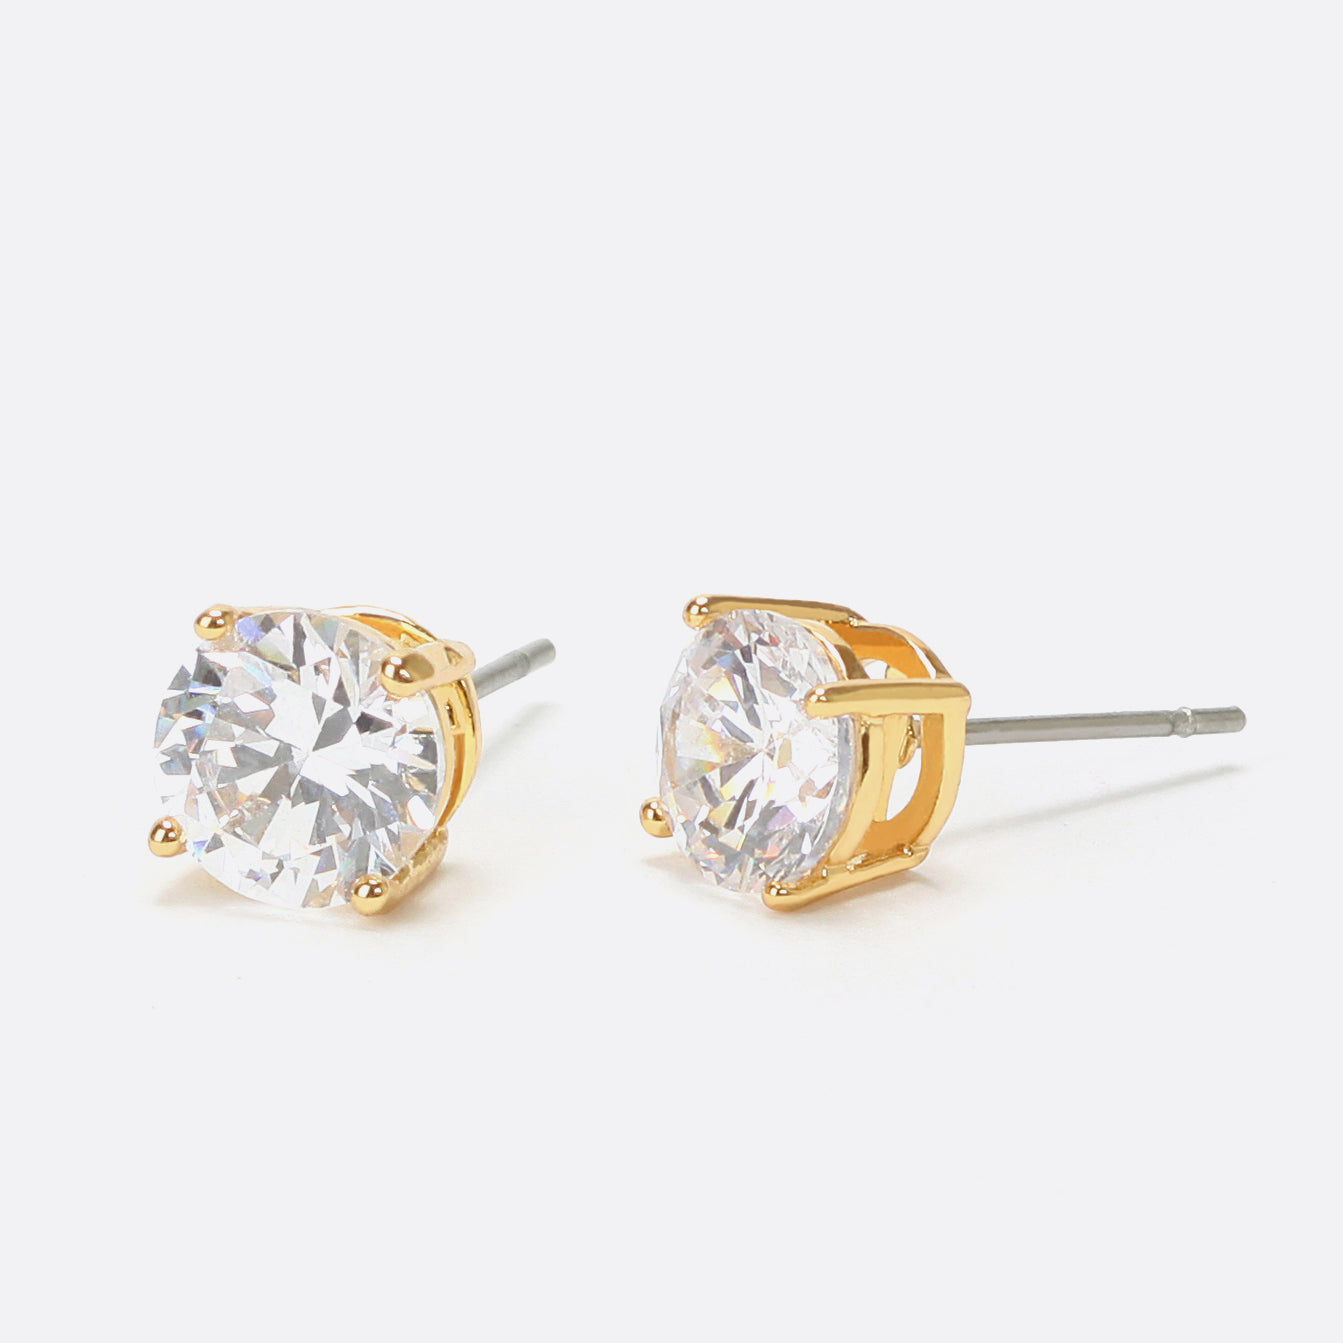 Fixed golden earrings with cubic zirconia